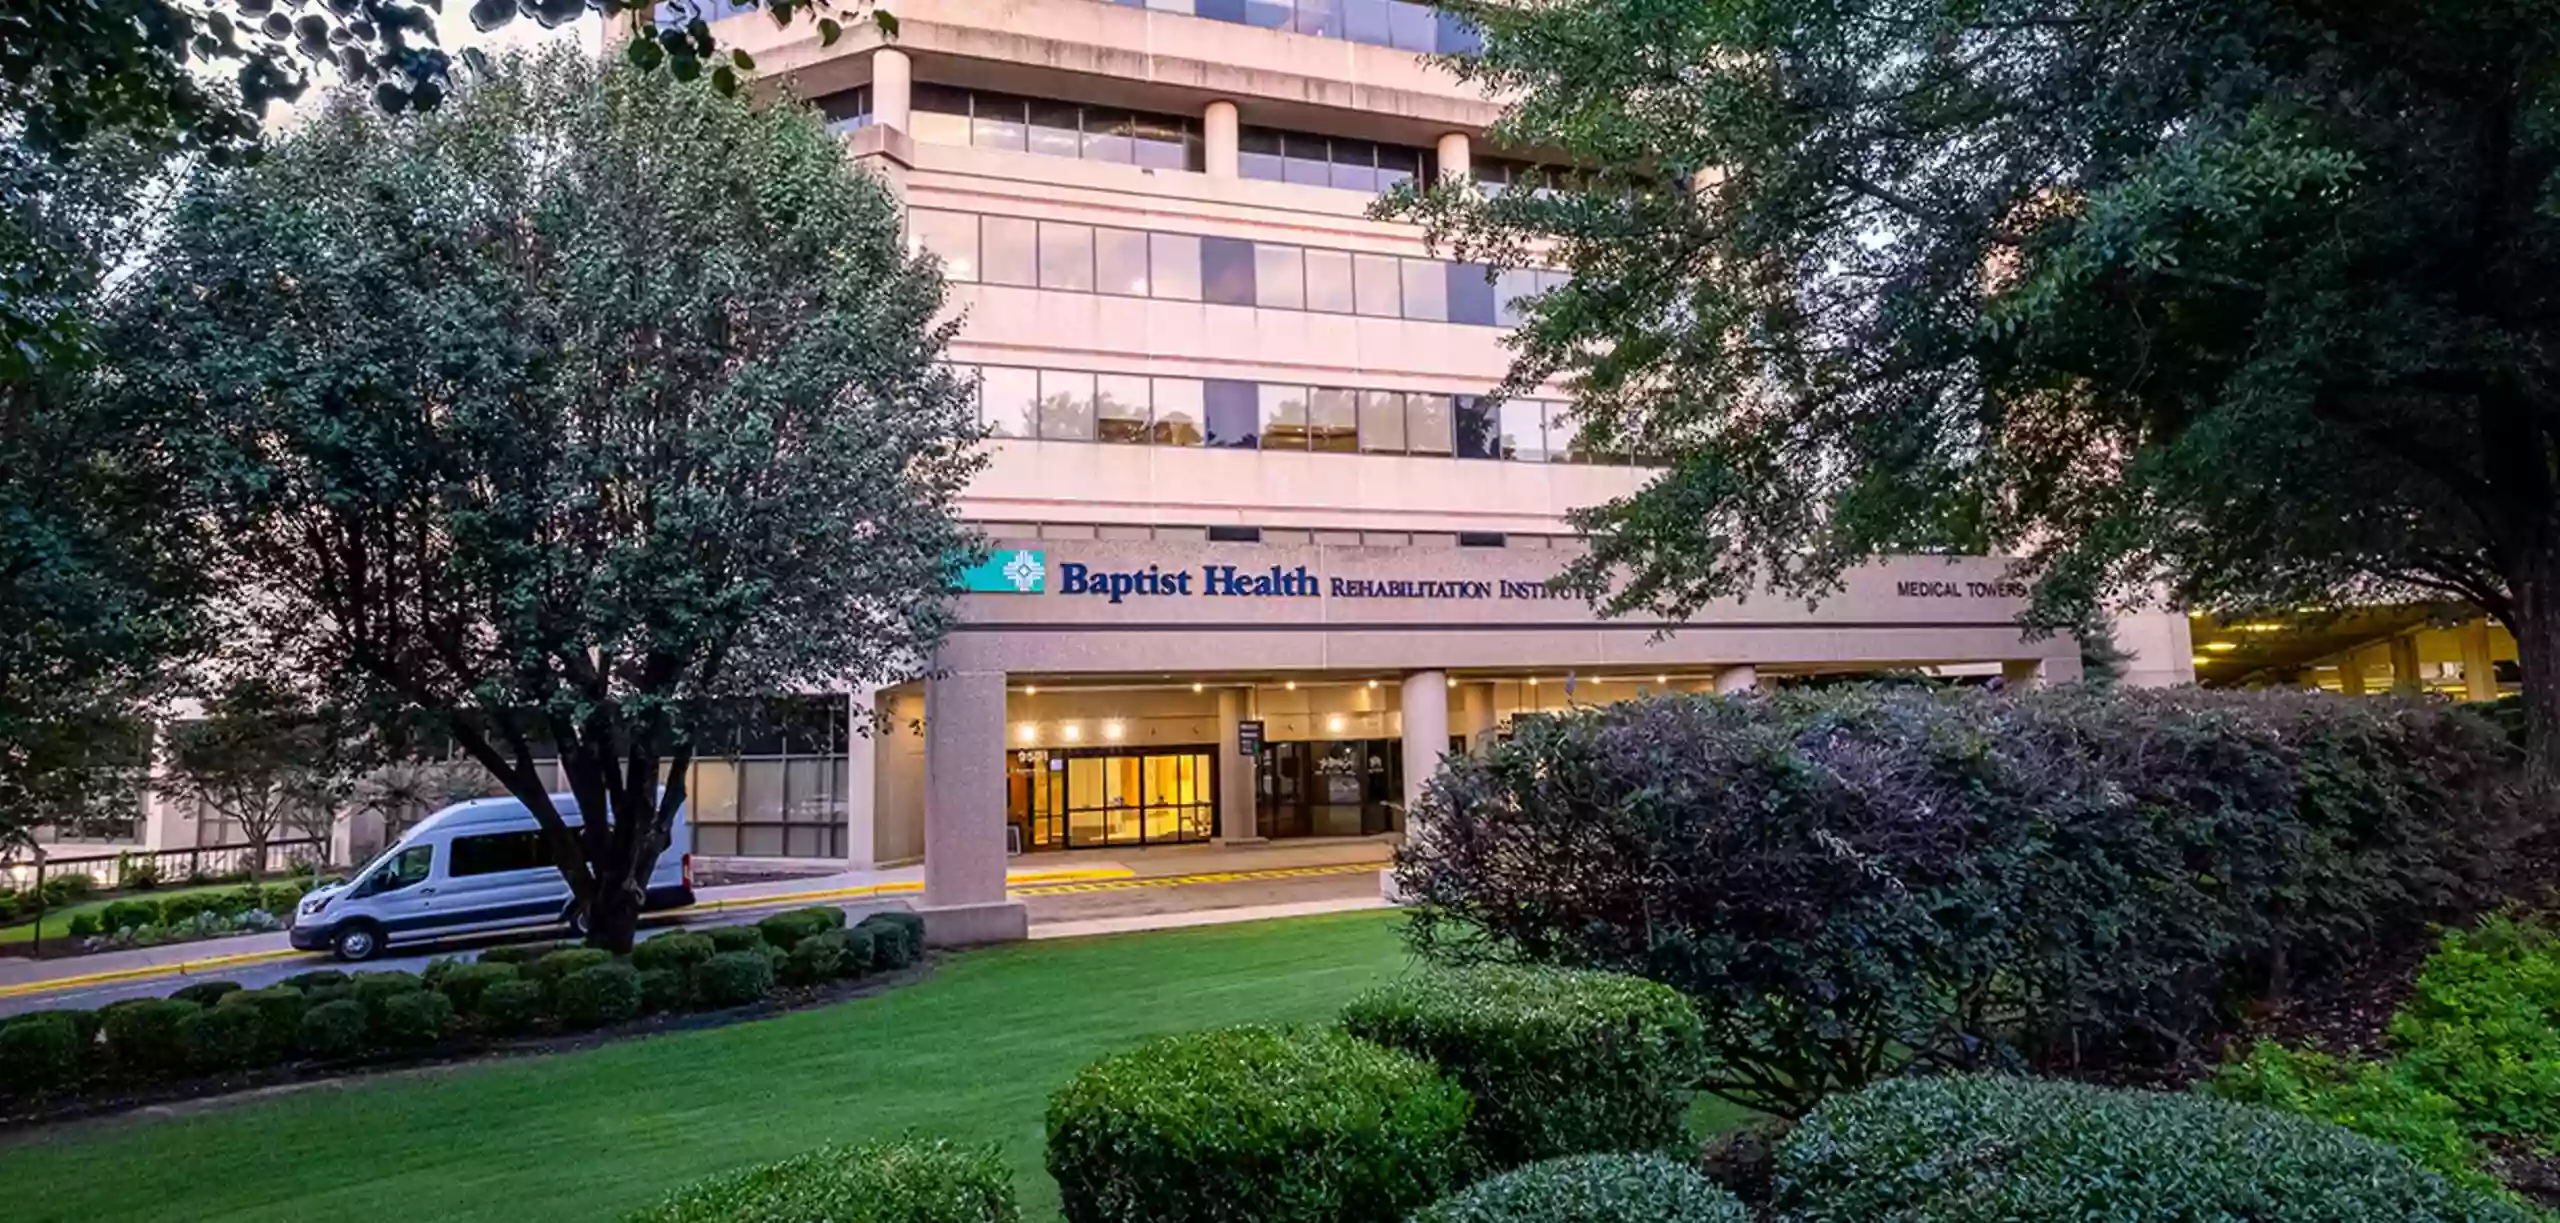 Baptist Health Rehabilitation Institute-Outpatient Clinic